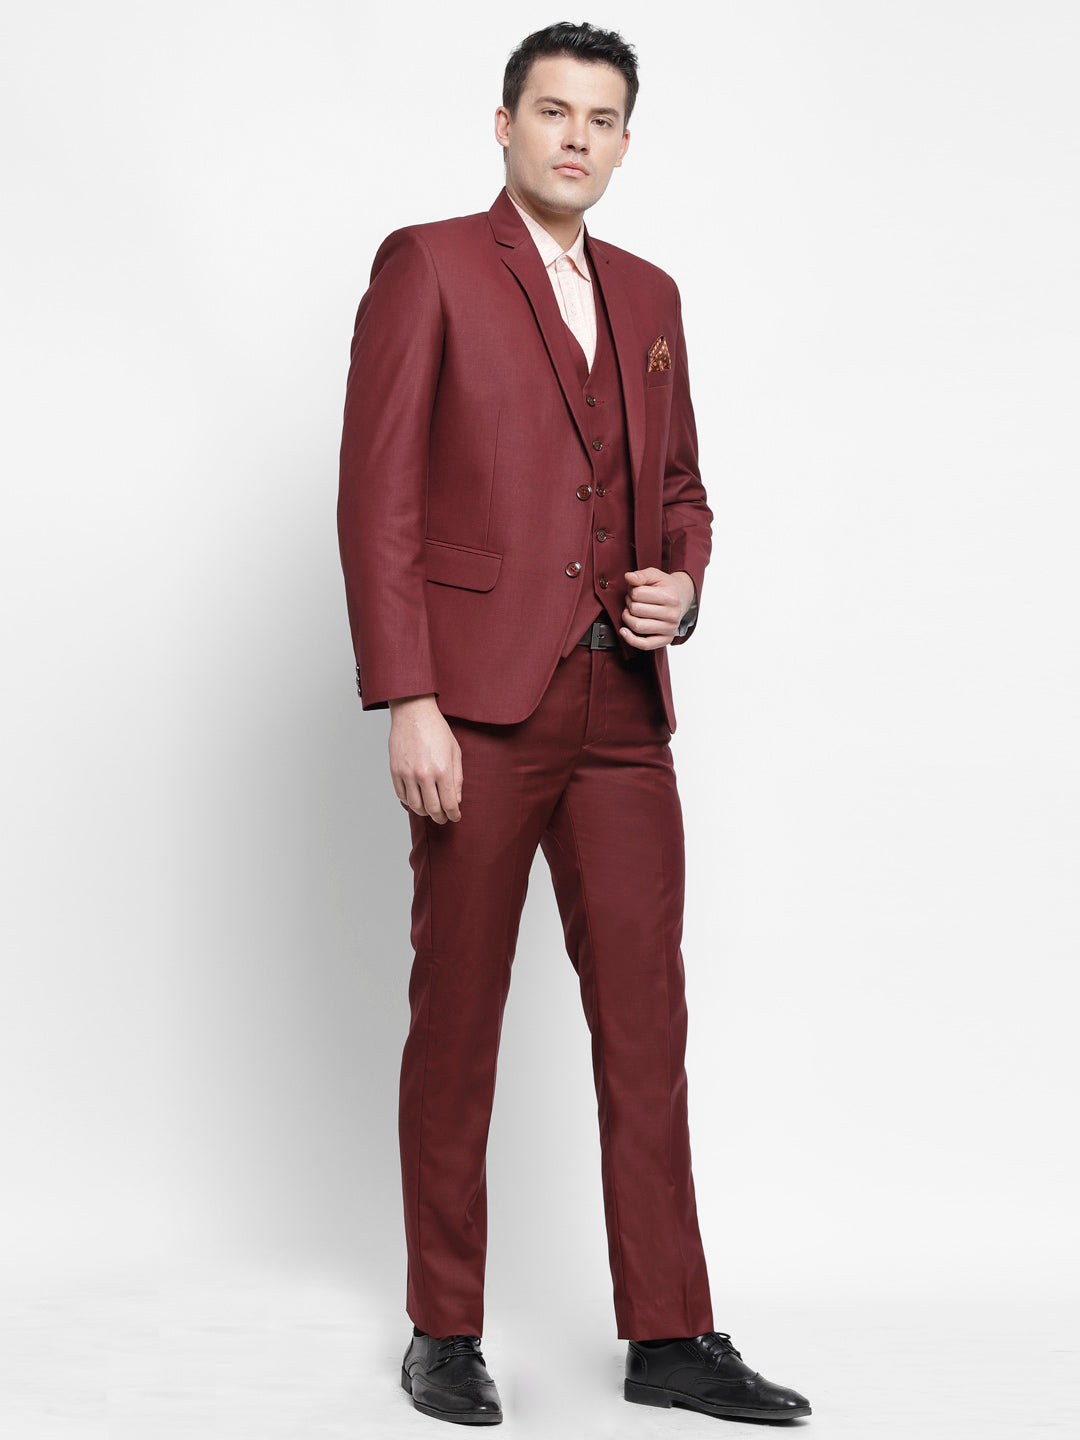 Discover 174+ raymond wine colour suit latest